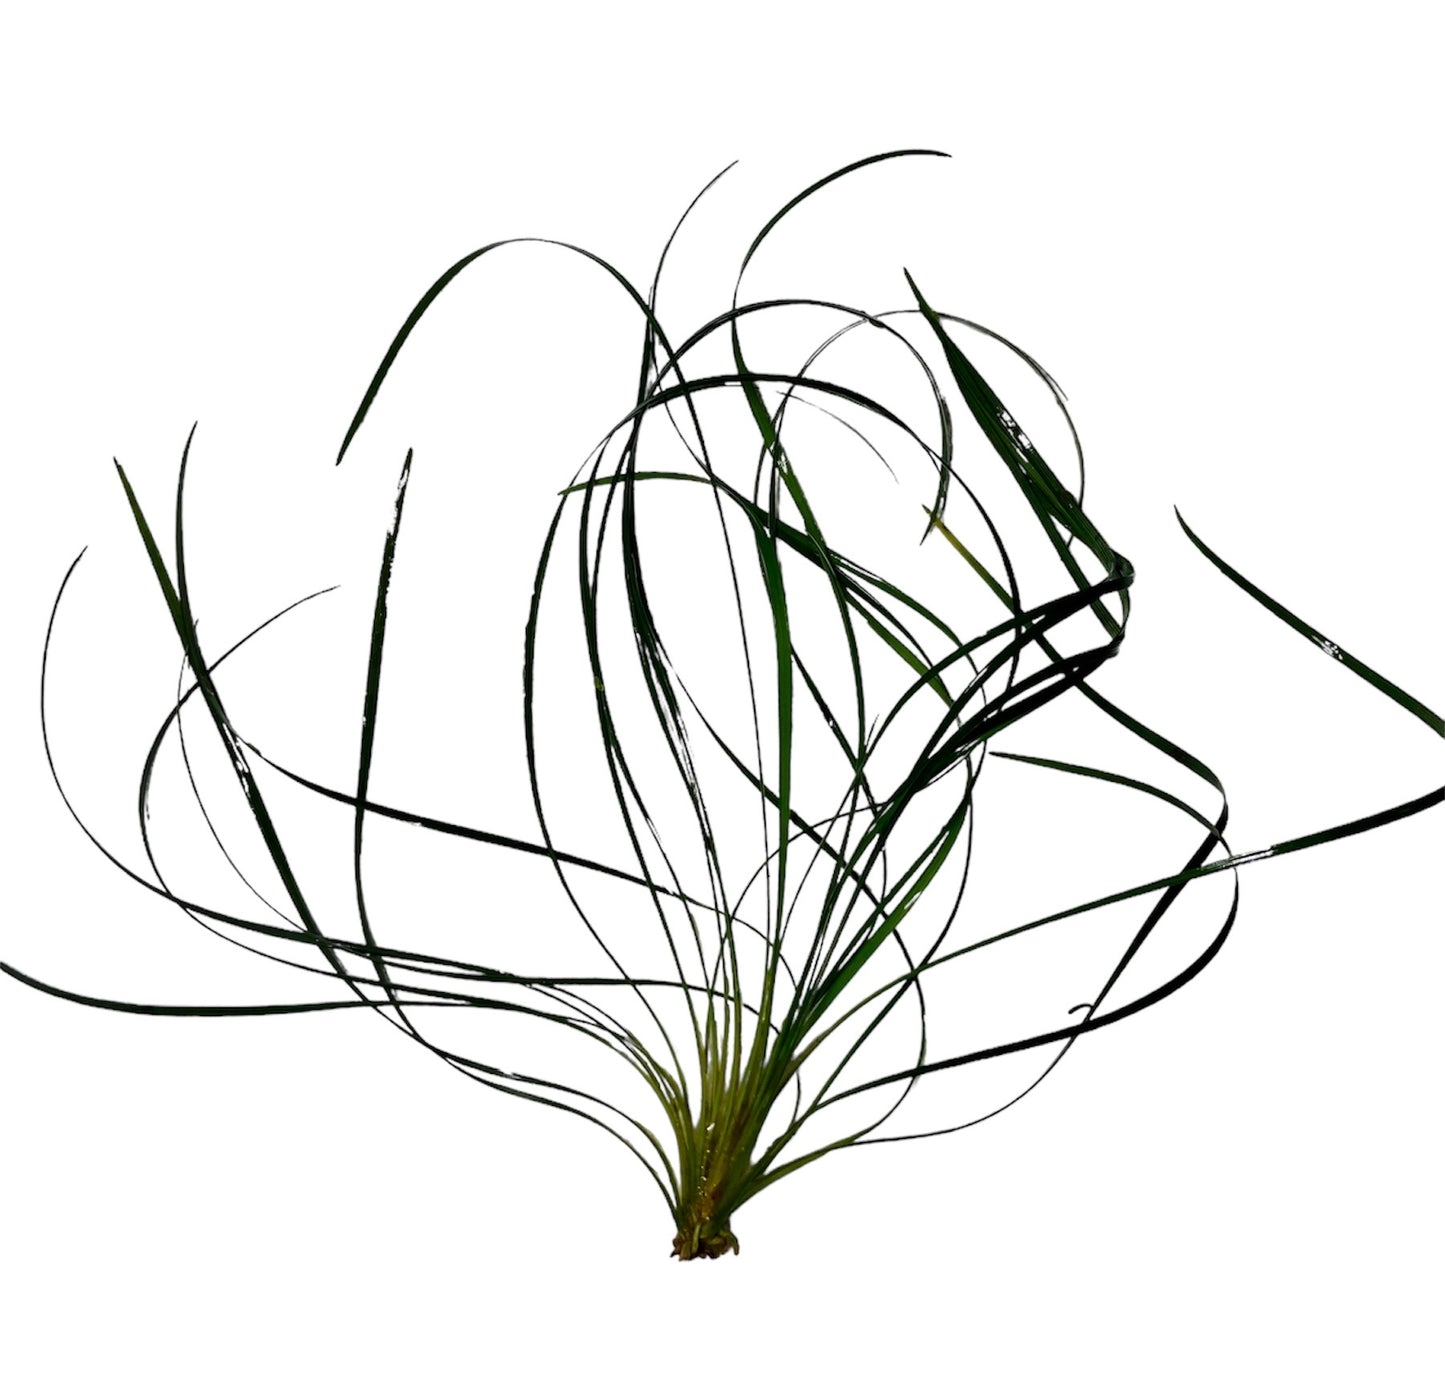 Mondo grass (Ophiopogon Japonicus Nana)